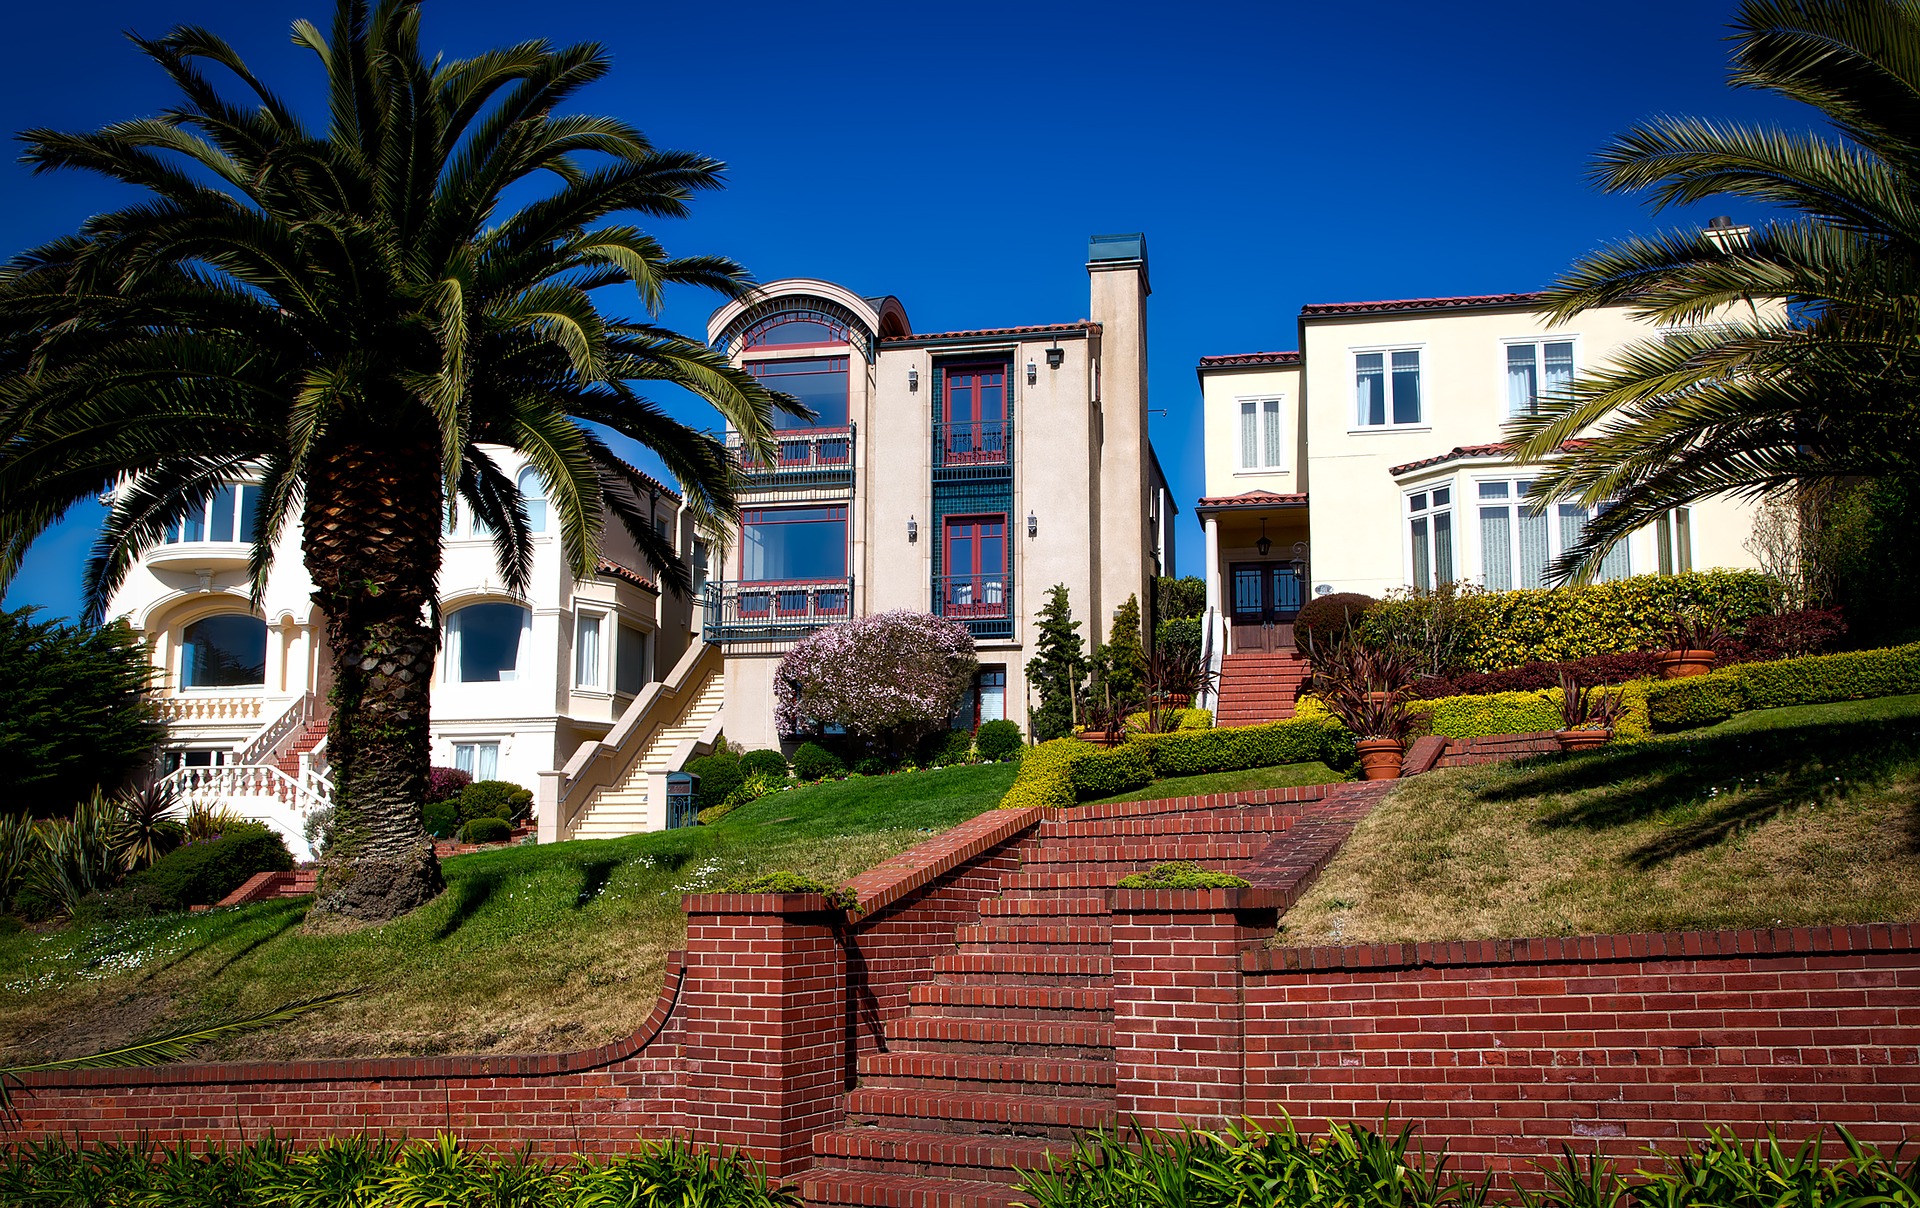 California housing